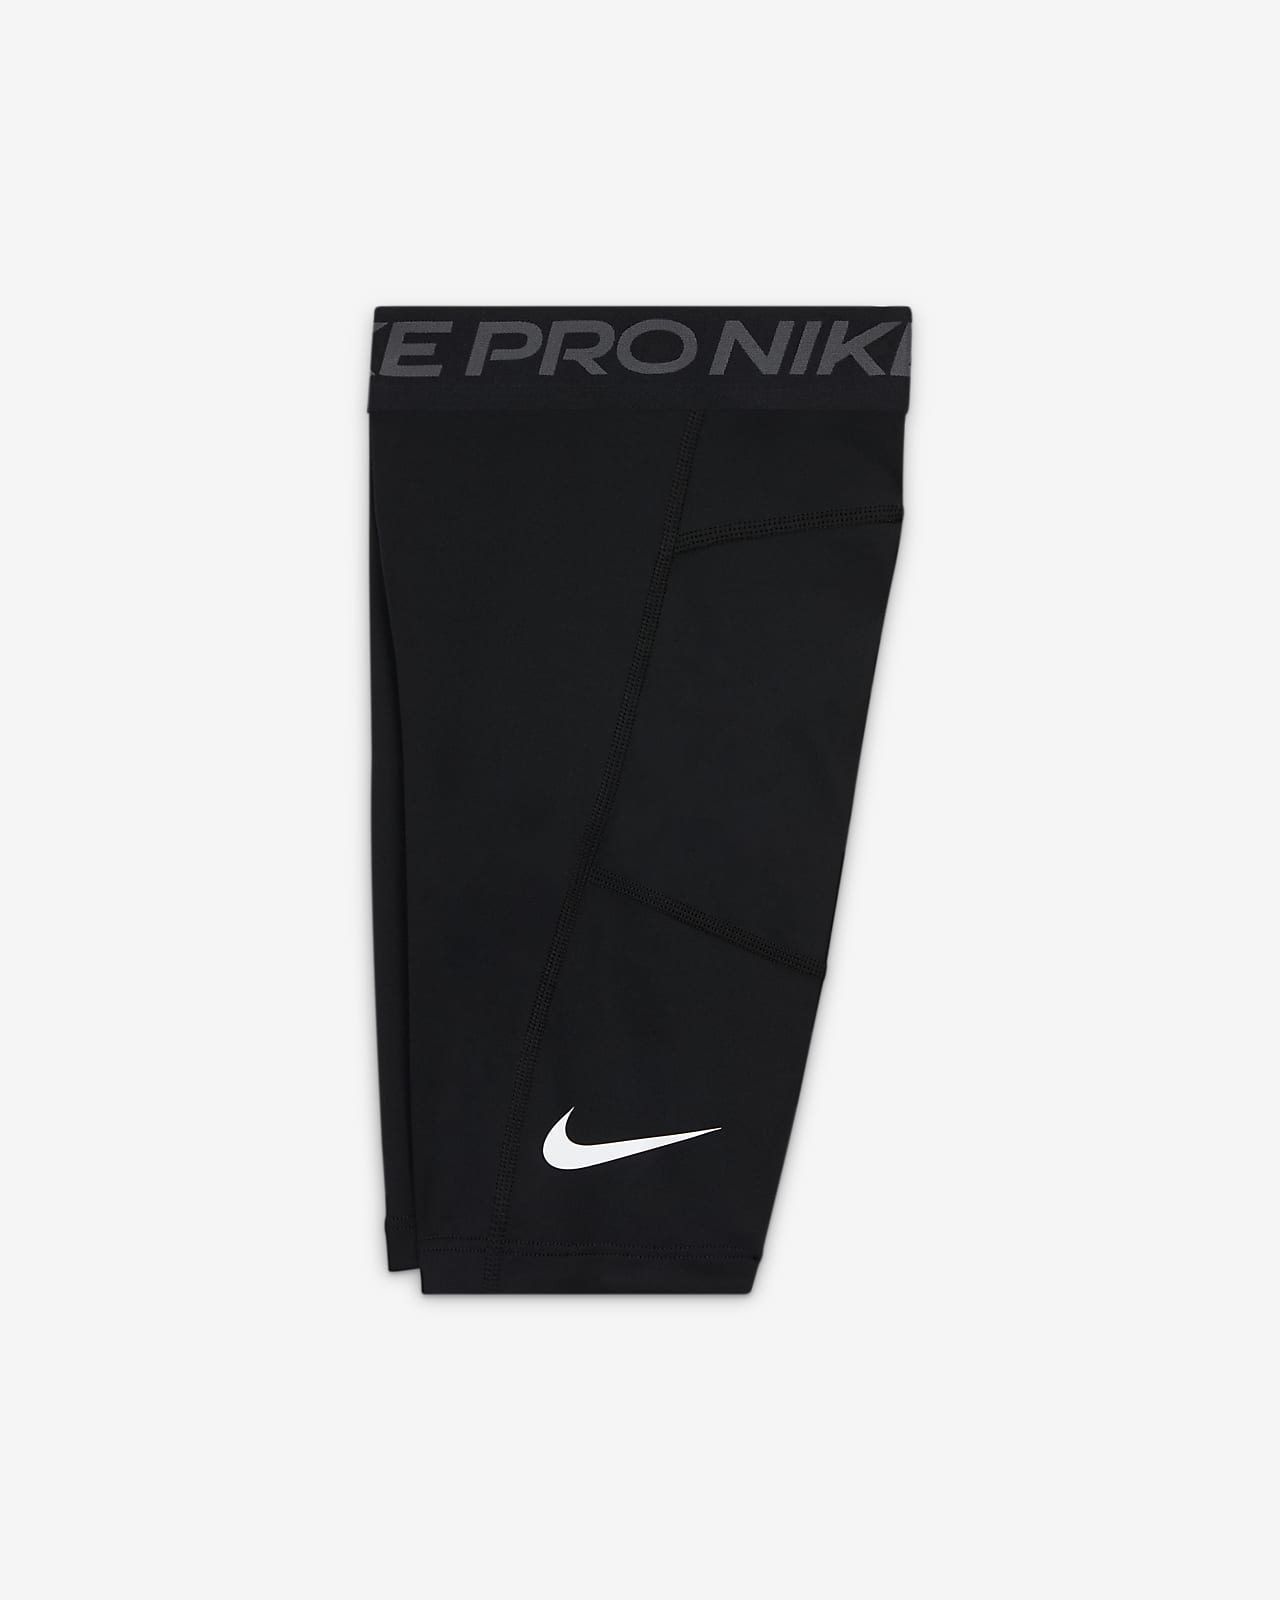 Nike Pro Older Kids' (Boys') Shorts